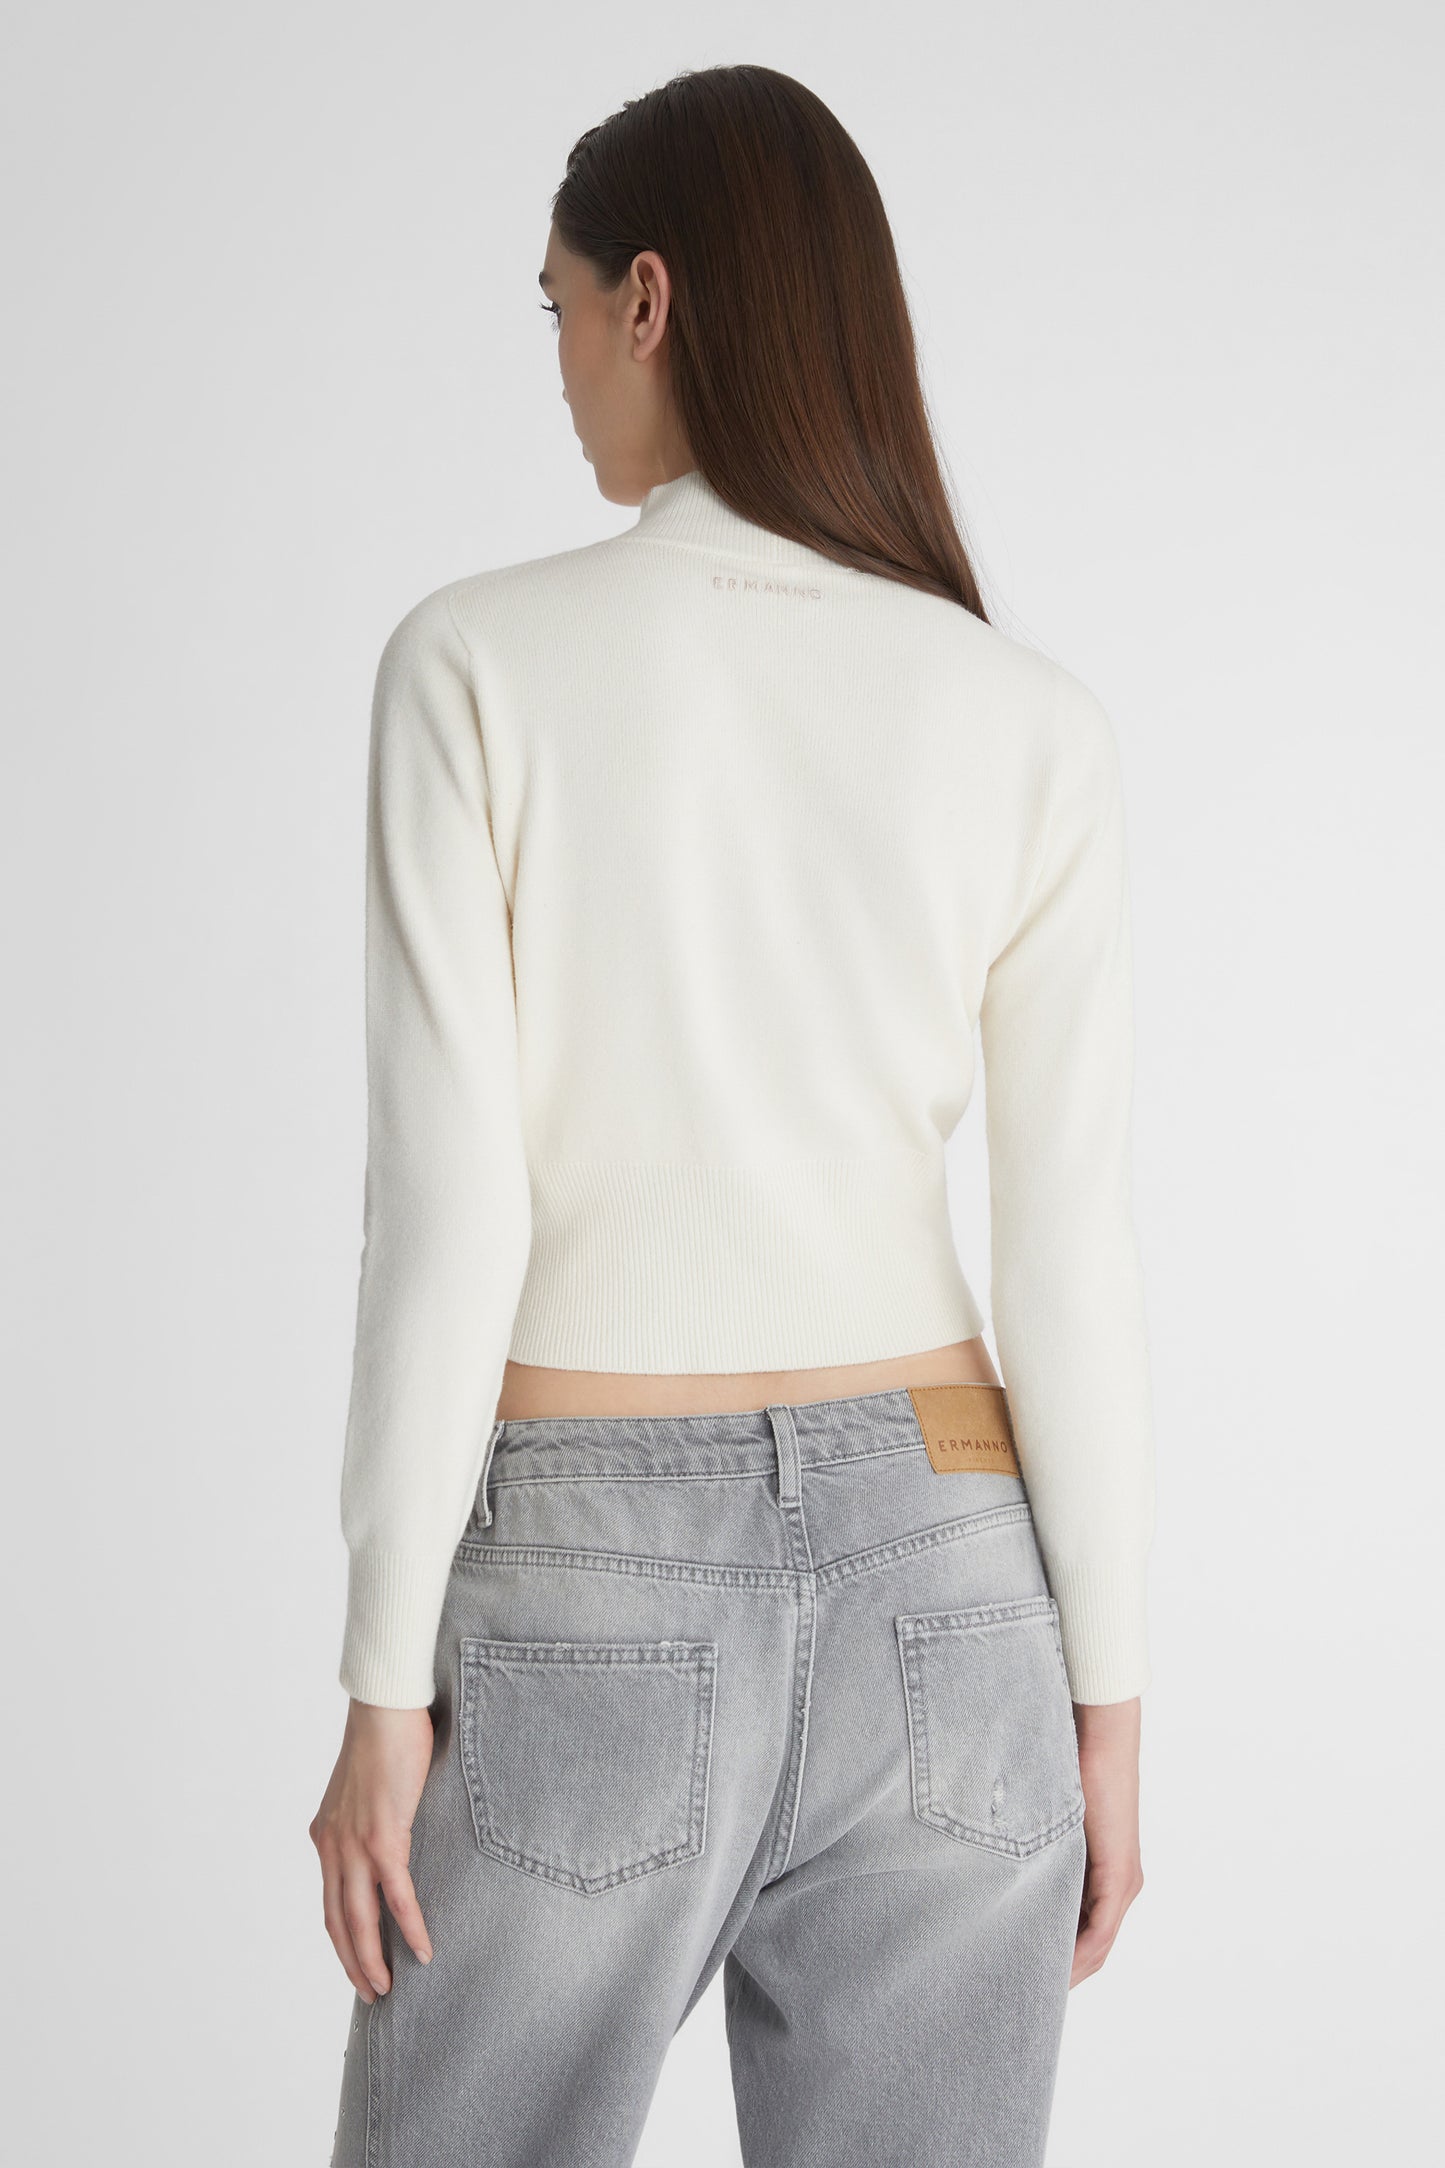 Rhinestone-adorned sweater